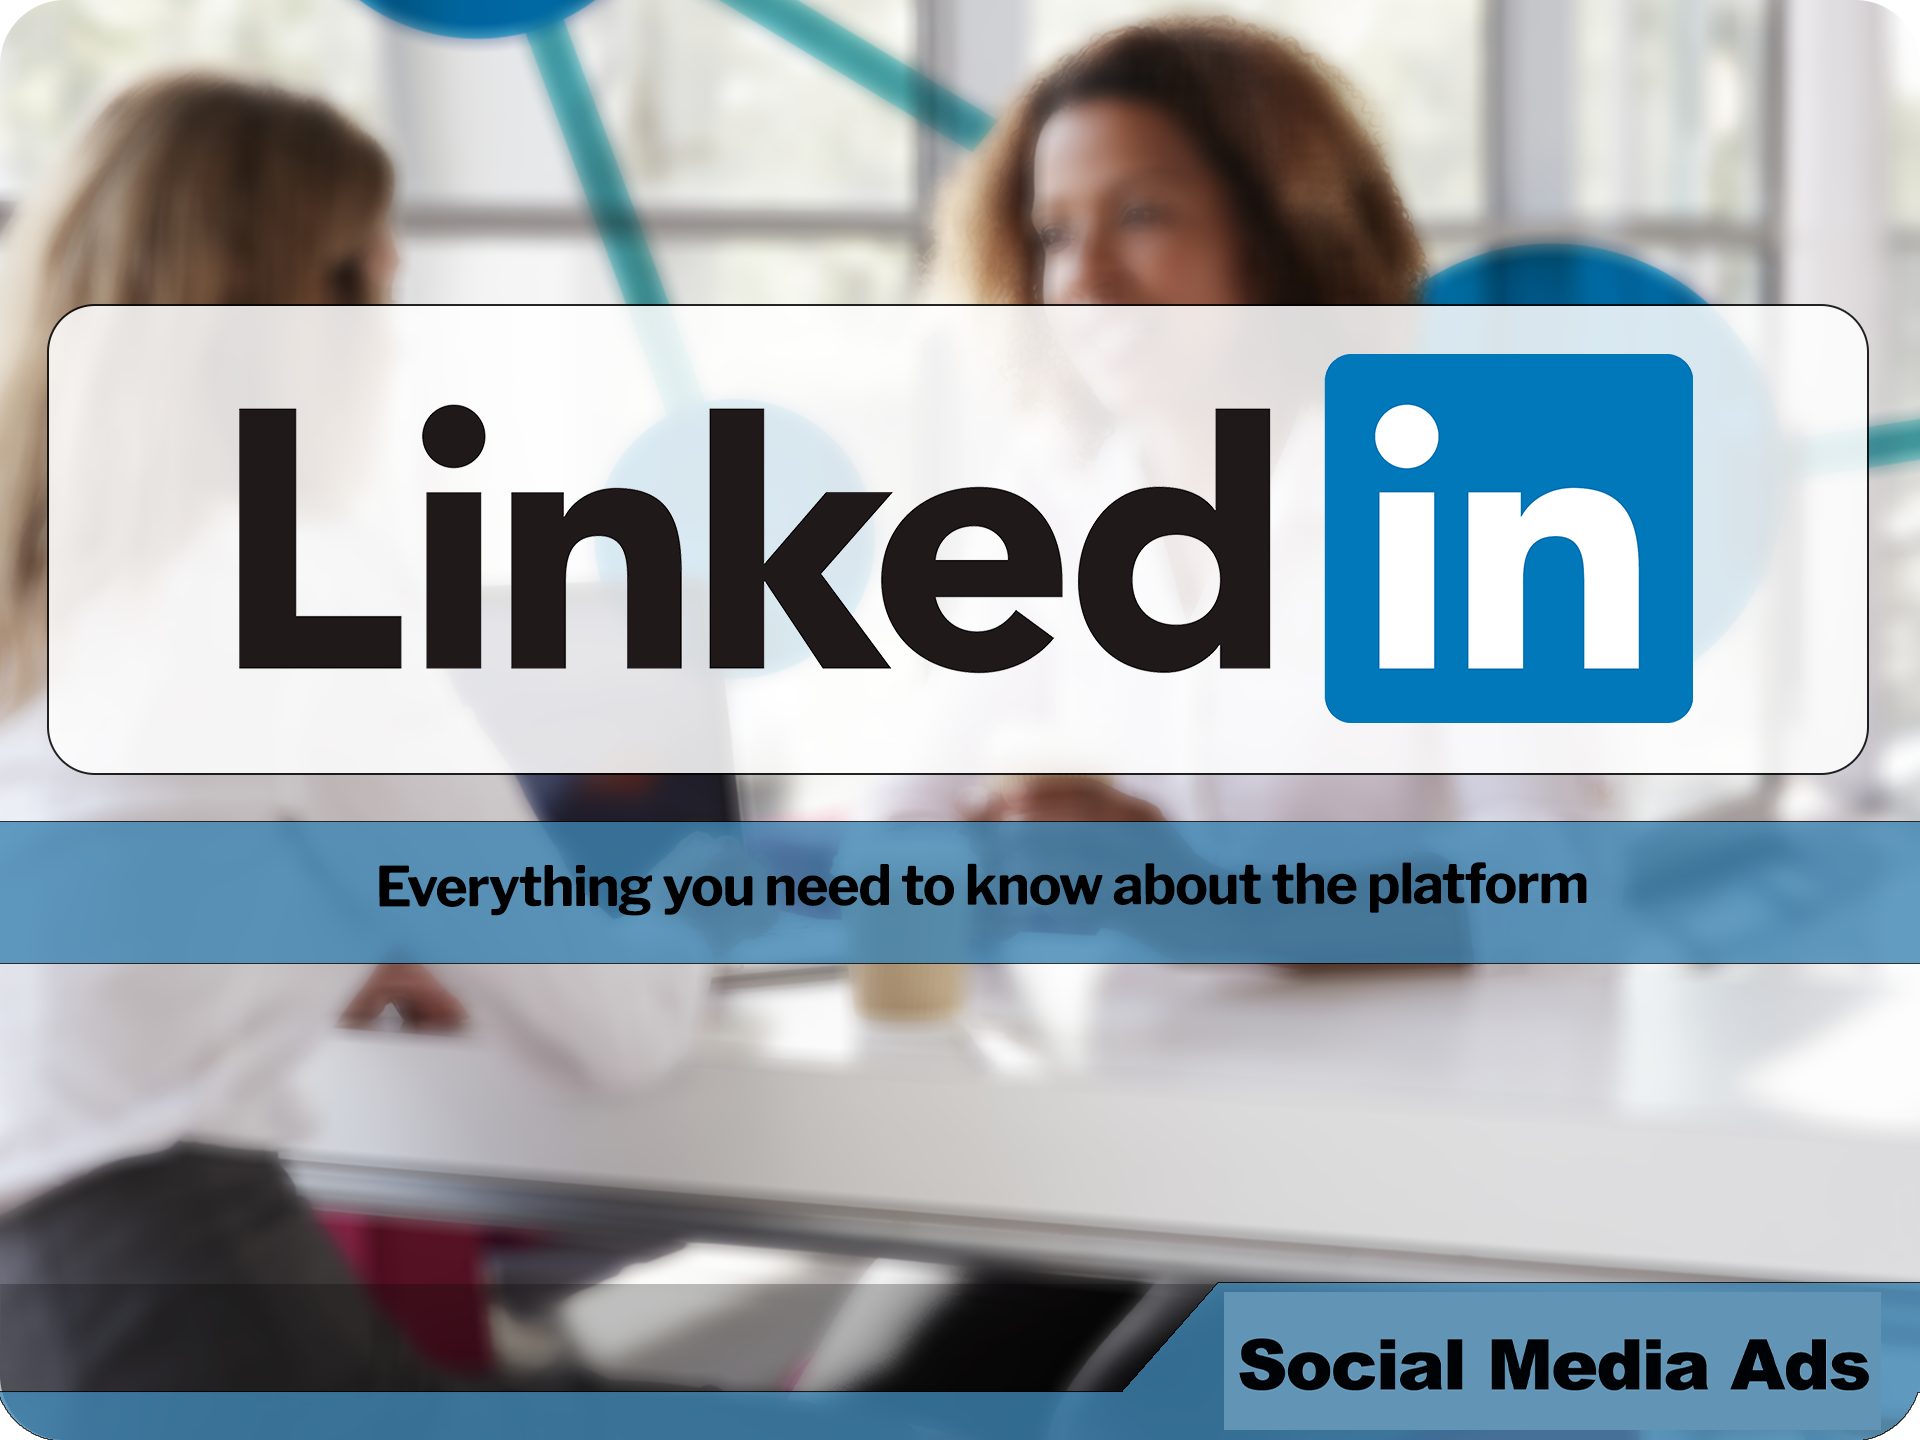 Get started with LinkedIn ads